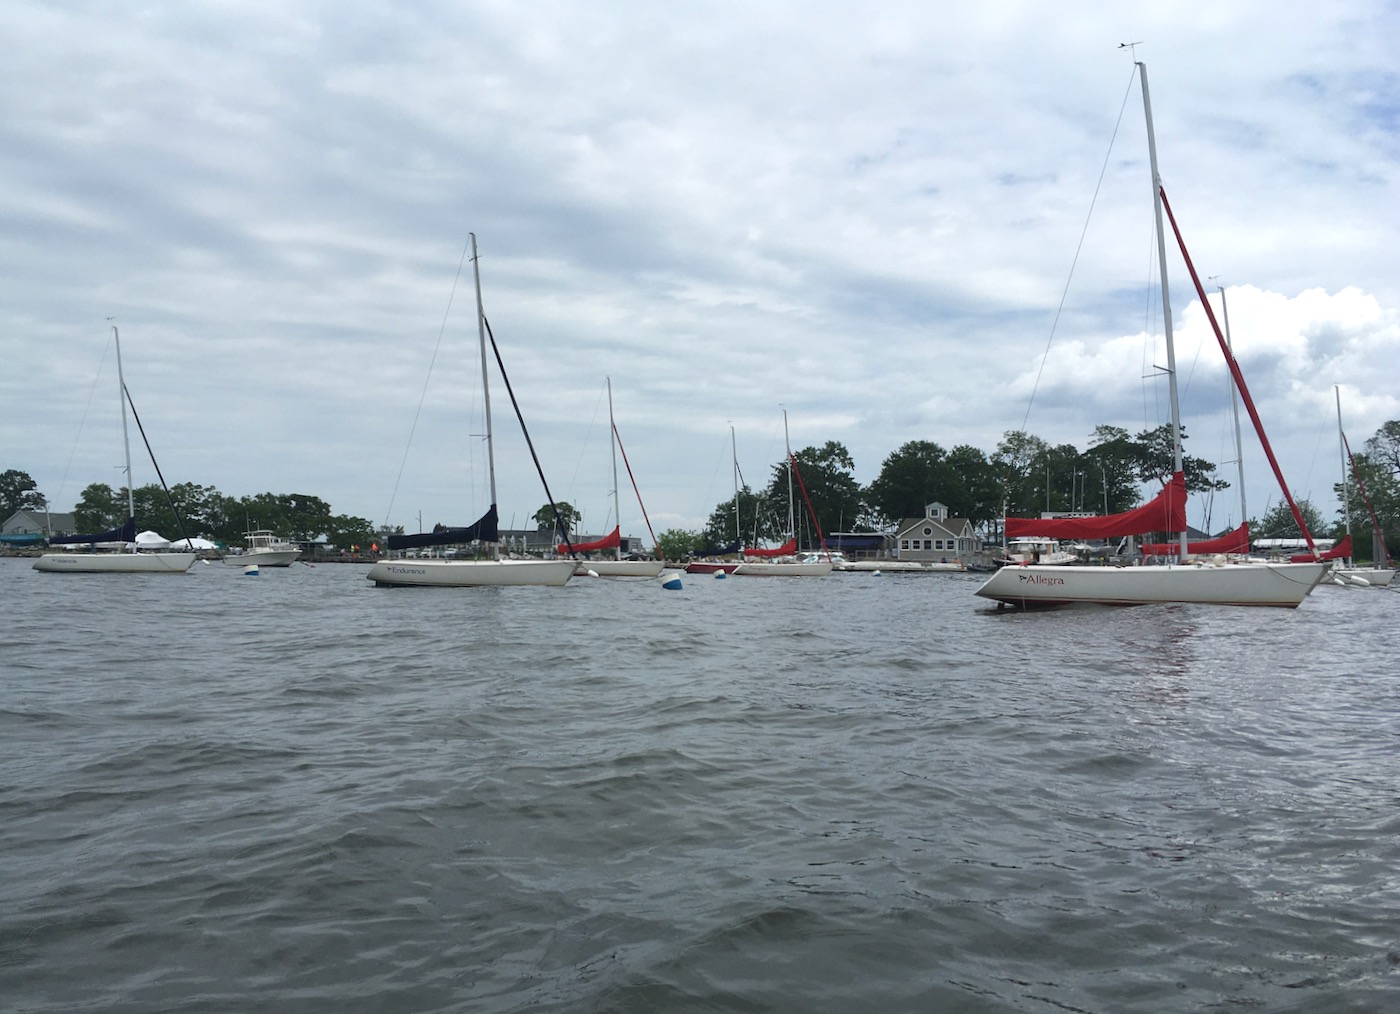 American Yacht Club sailboats